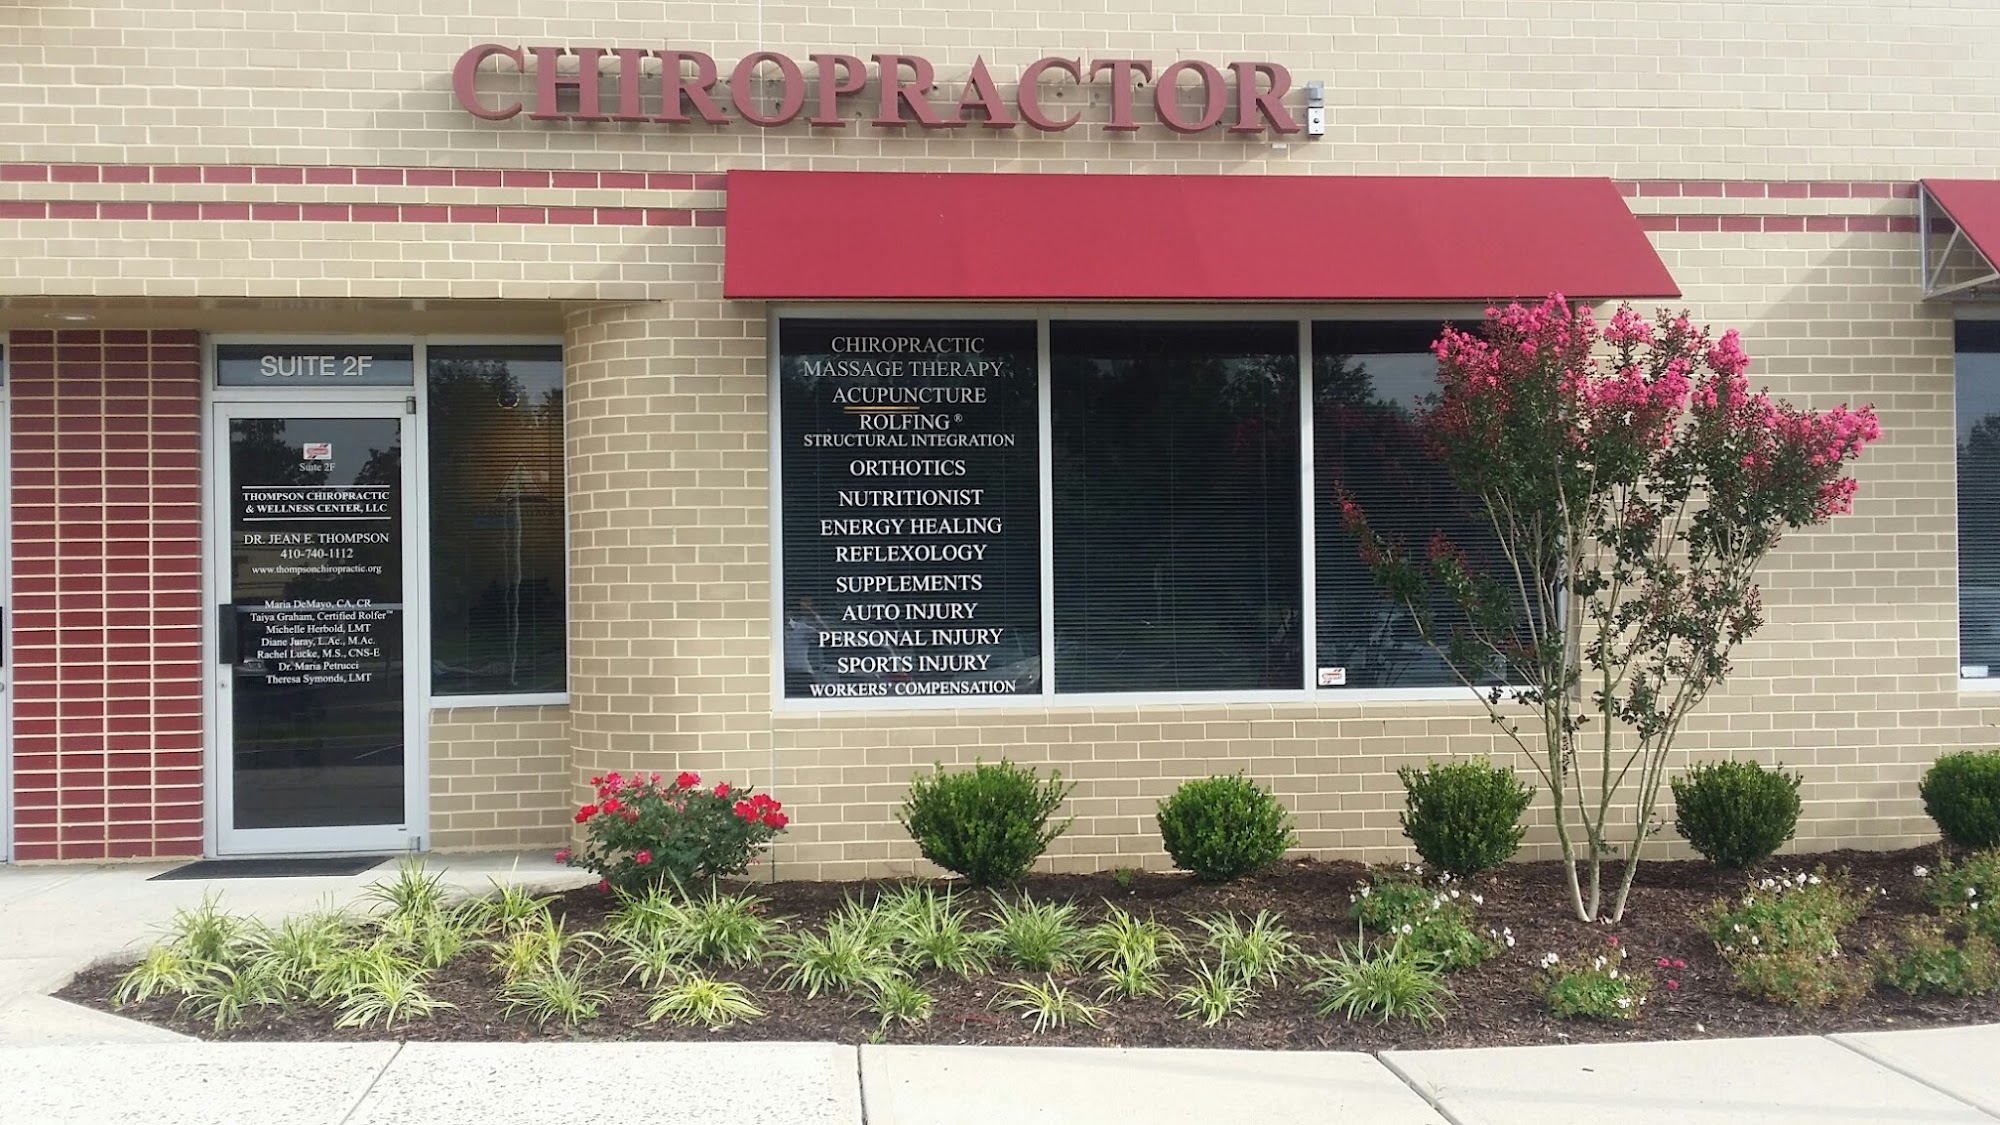 Thompson Chiropractic and Wellness Center, LLC